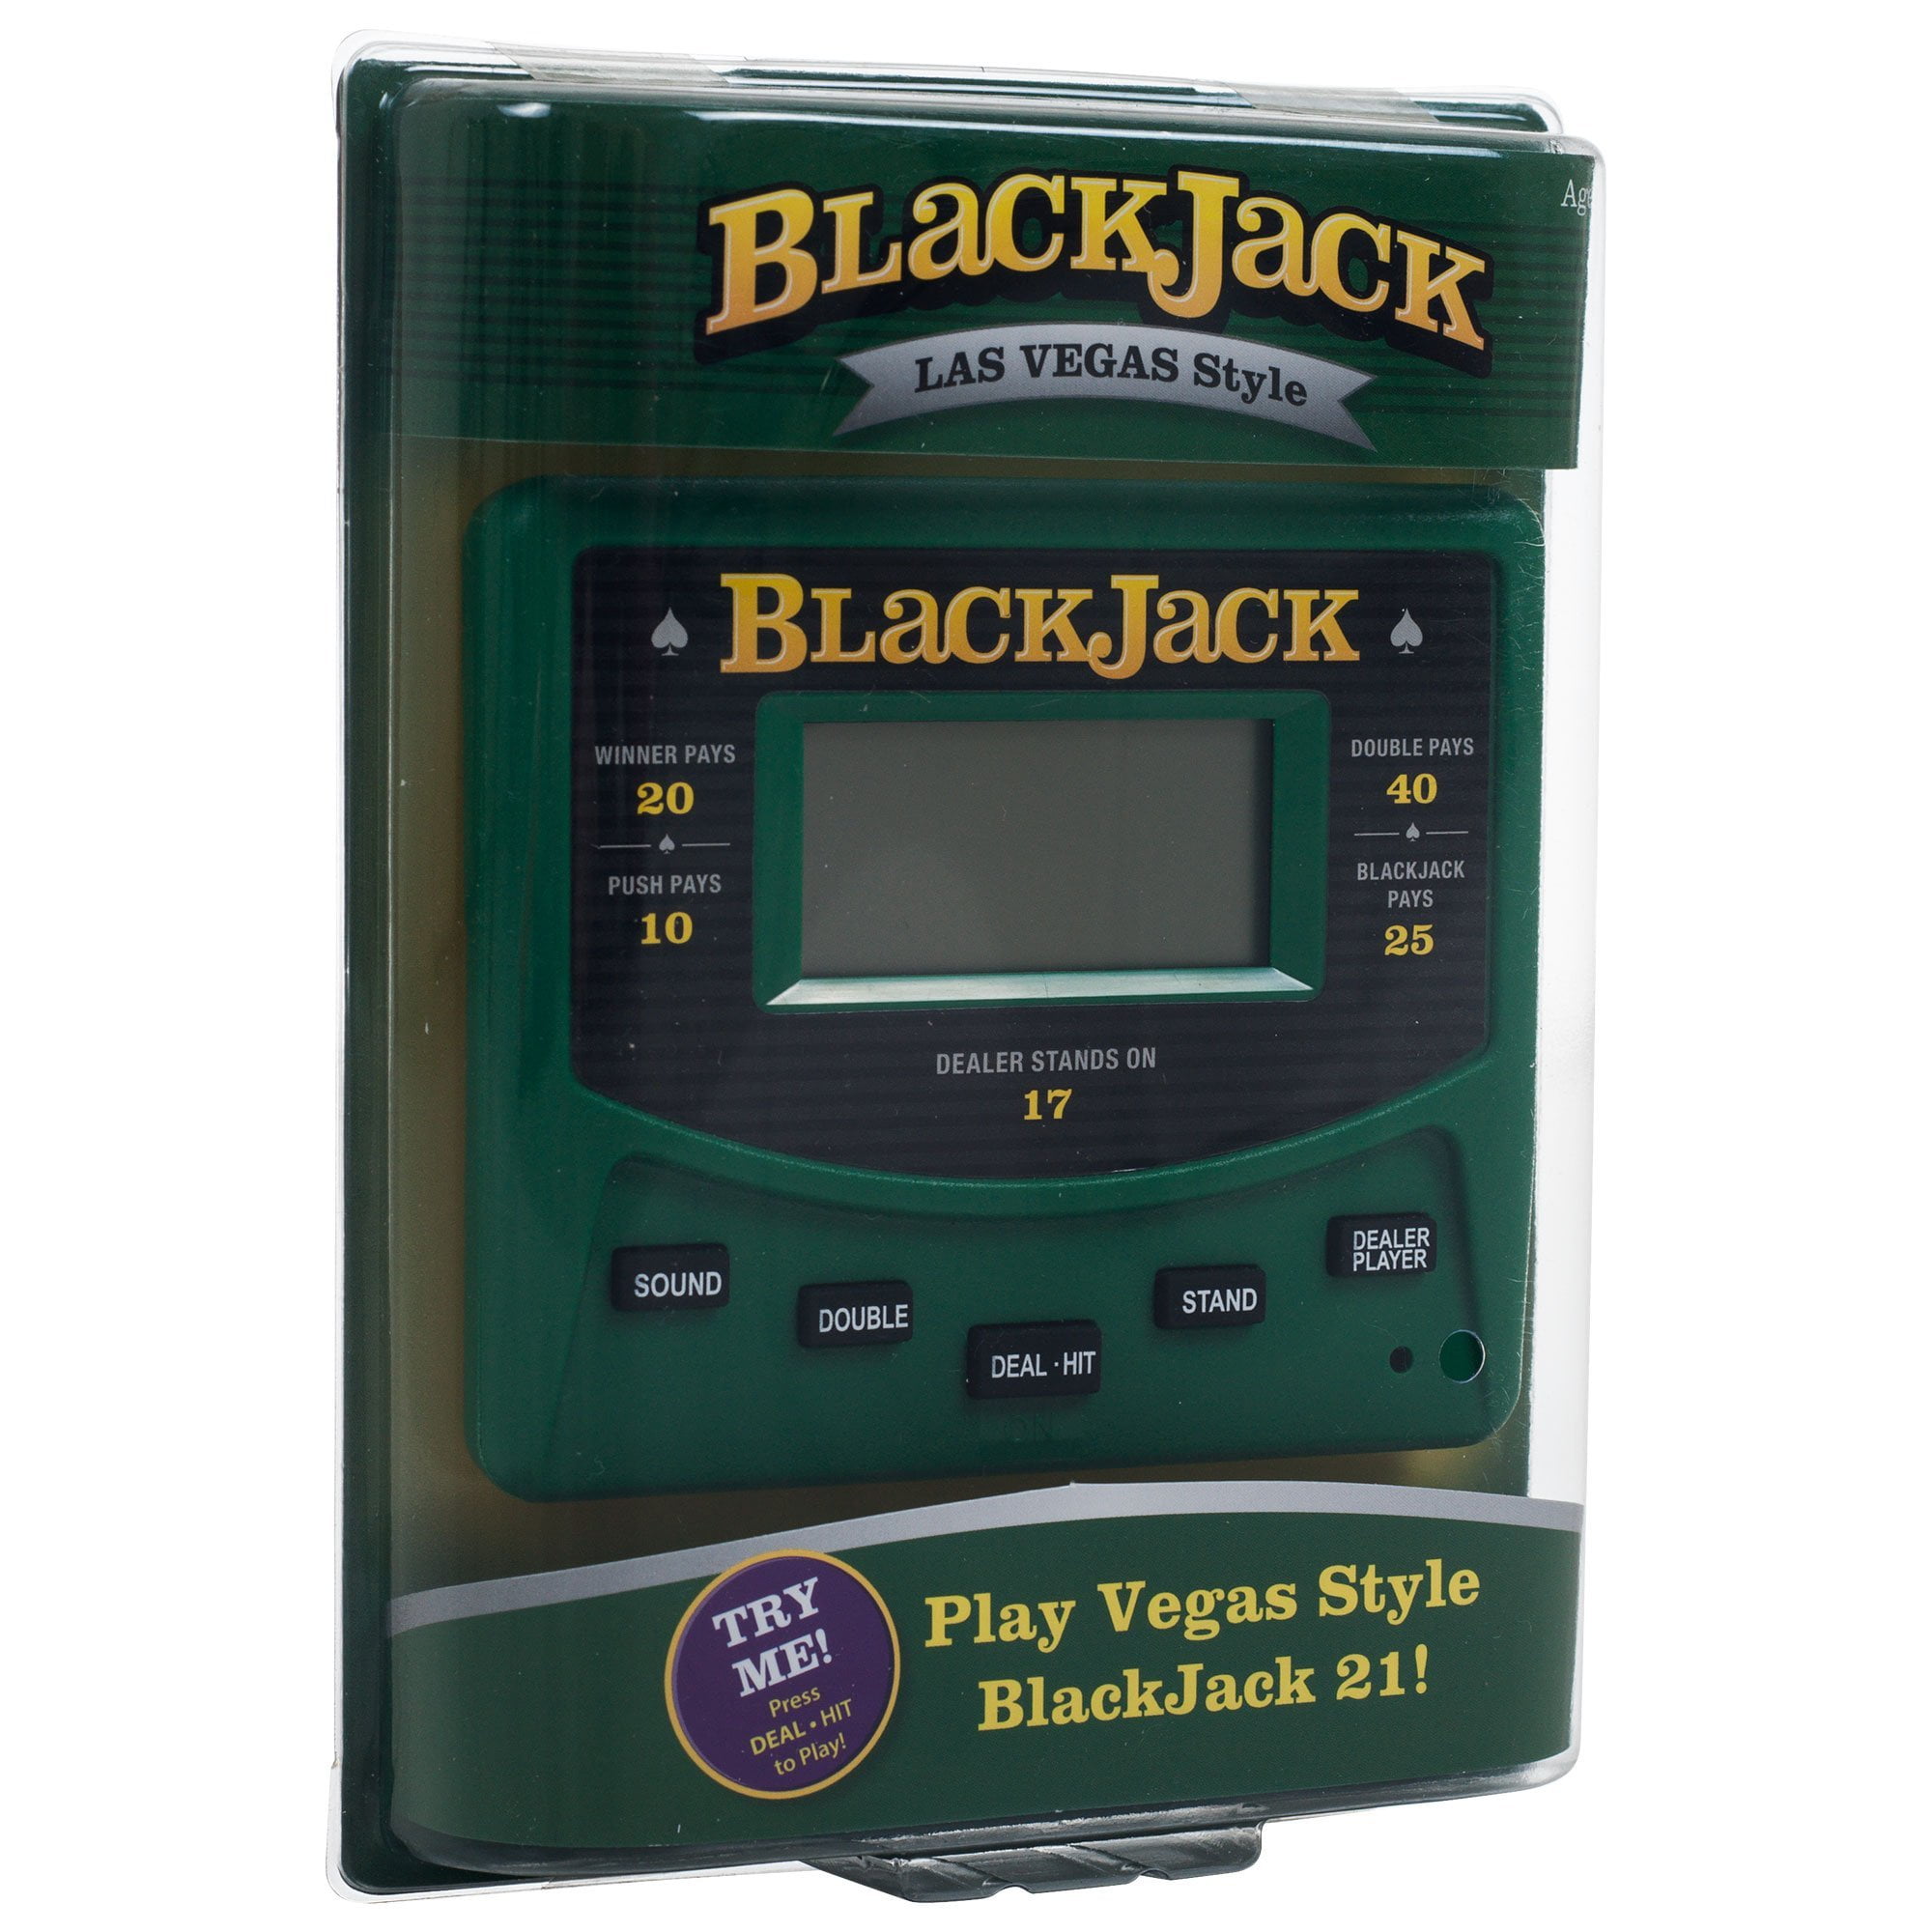 Hit Me 21 Handheld Blackjack Electronic Game by Radica for sale online